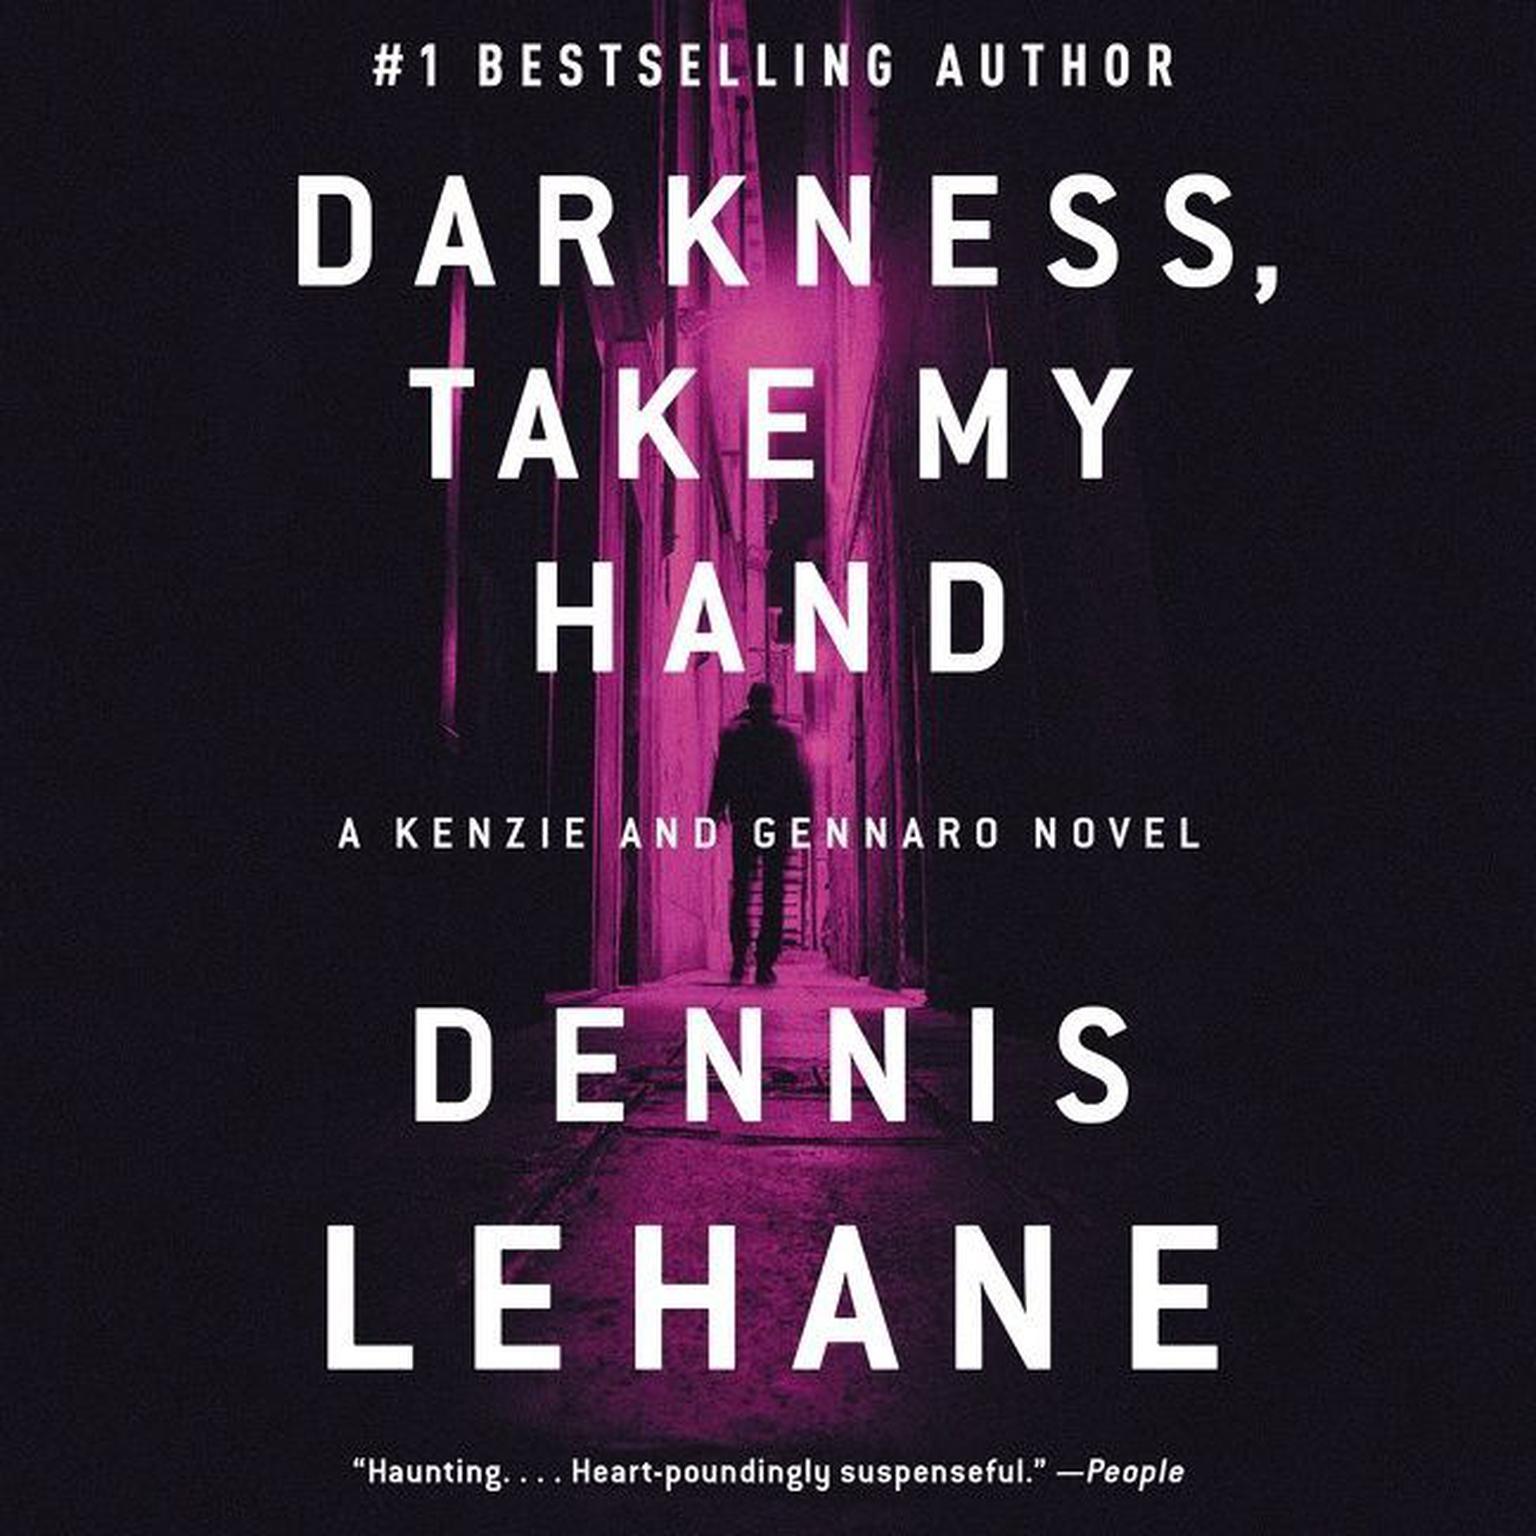 Darkness, Take My Hand Audiobook, by Dennis Lehane